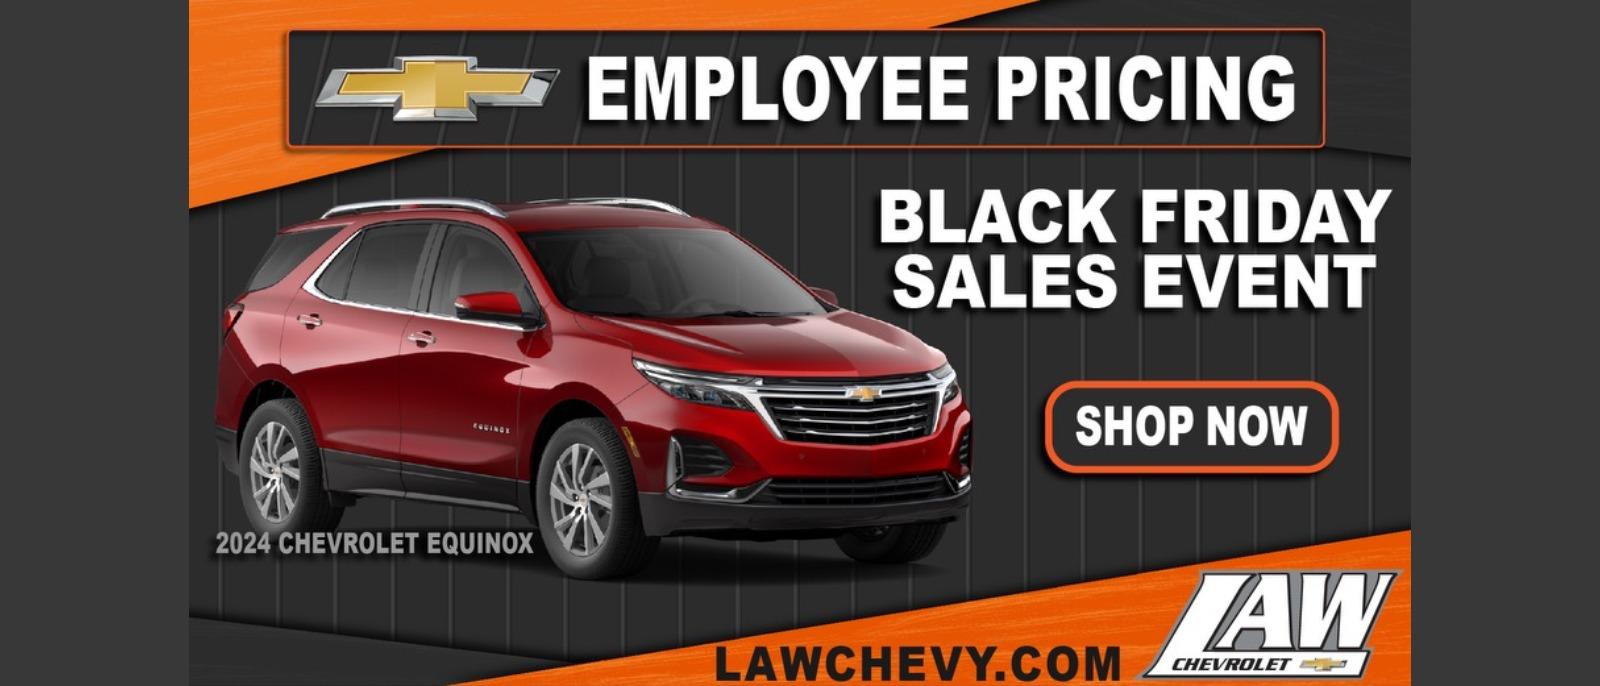 Black friday sales event
2024 Chevrolet Equinox